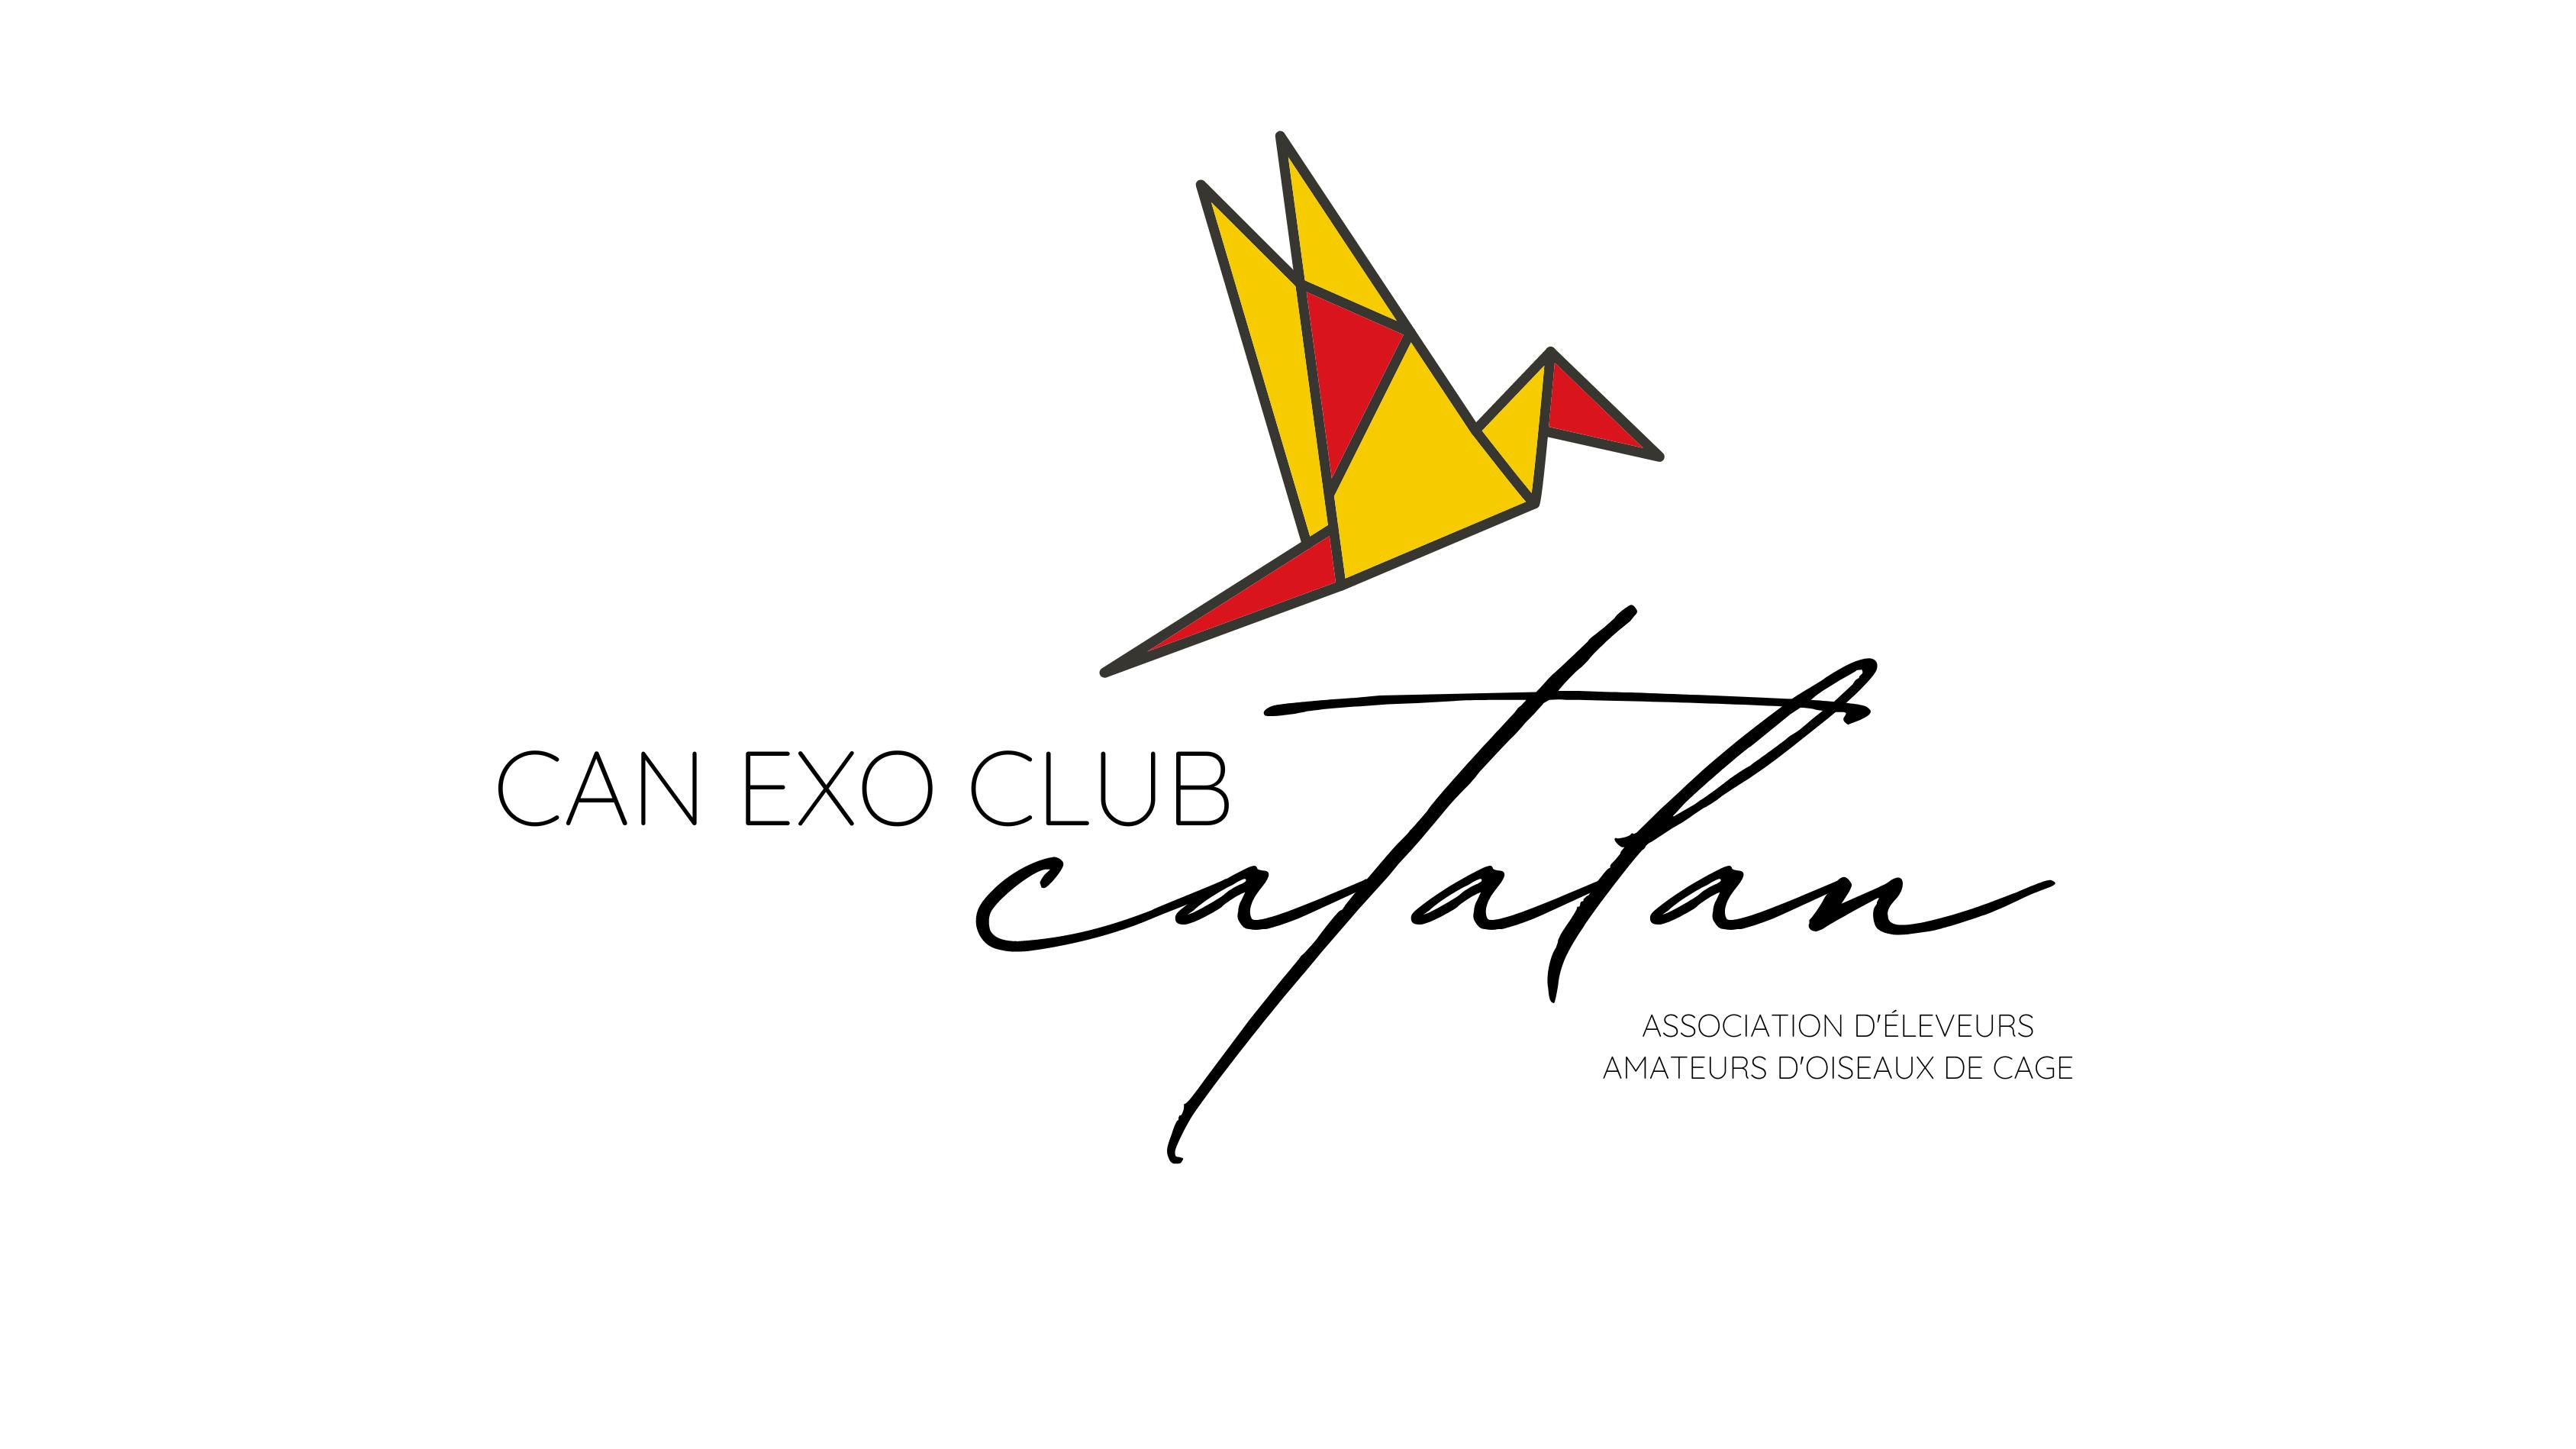 CAN EXO CLUB CATALAN